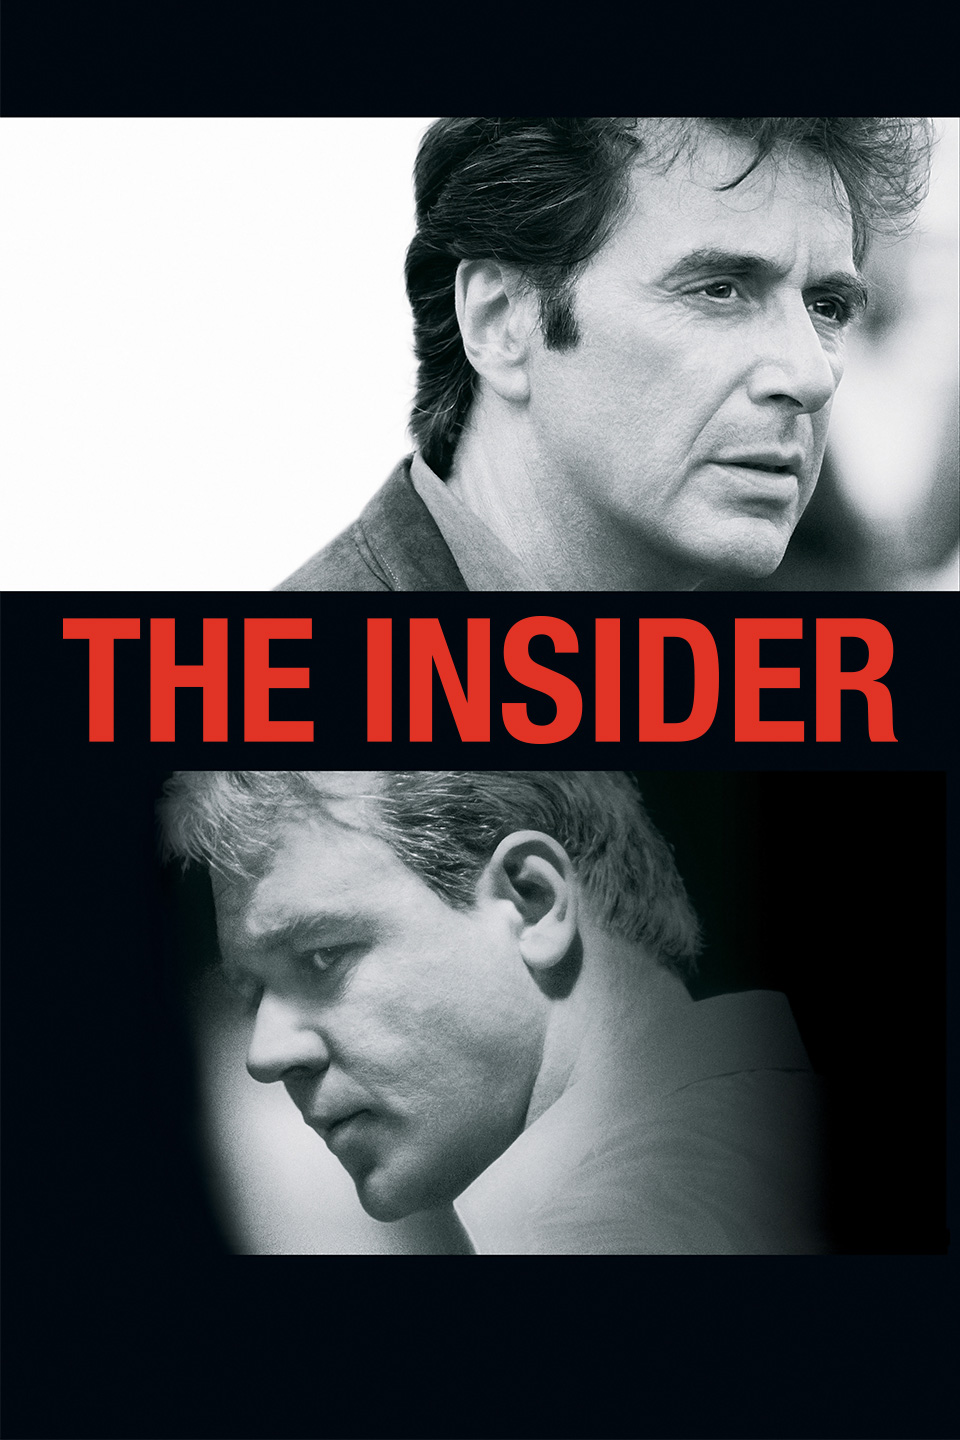 The Insider (1999) ★★★★☆